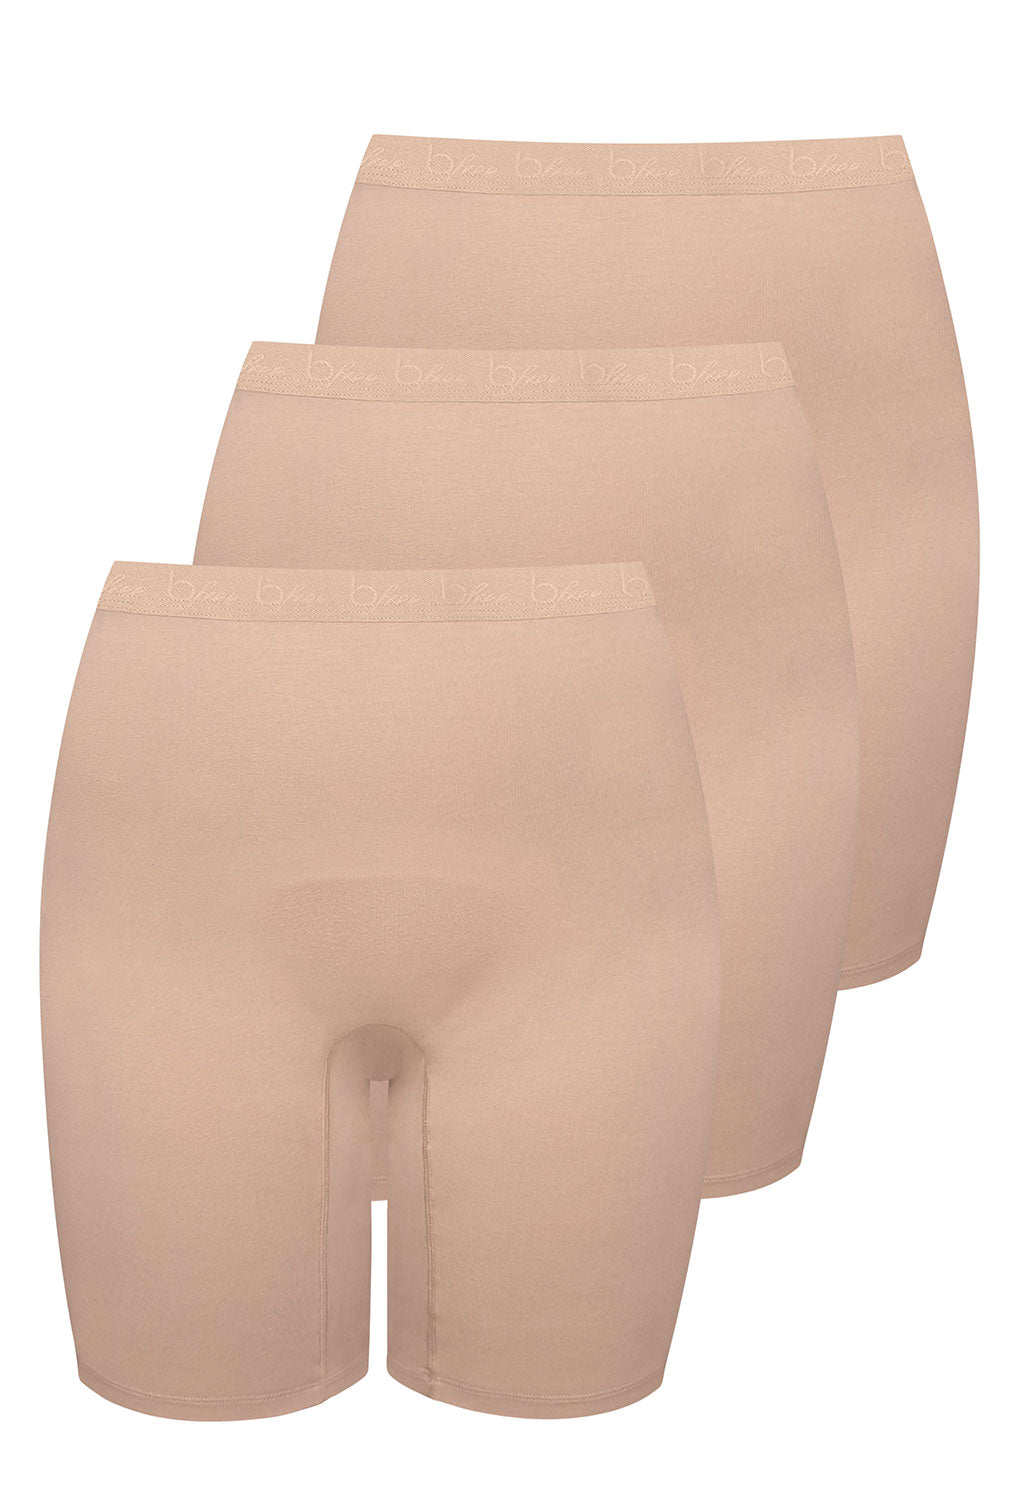 Cotton Anti-Chafing Leak Proof Light Bladder Leakage Shorts - 3 Pack